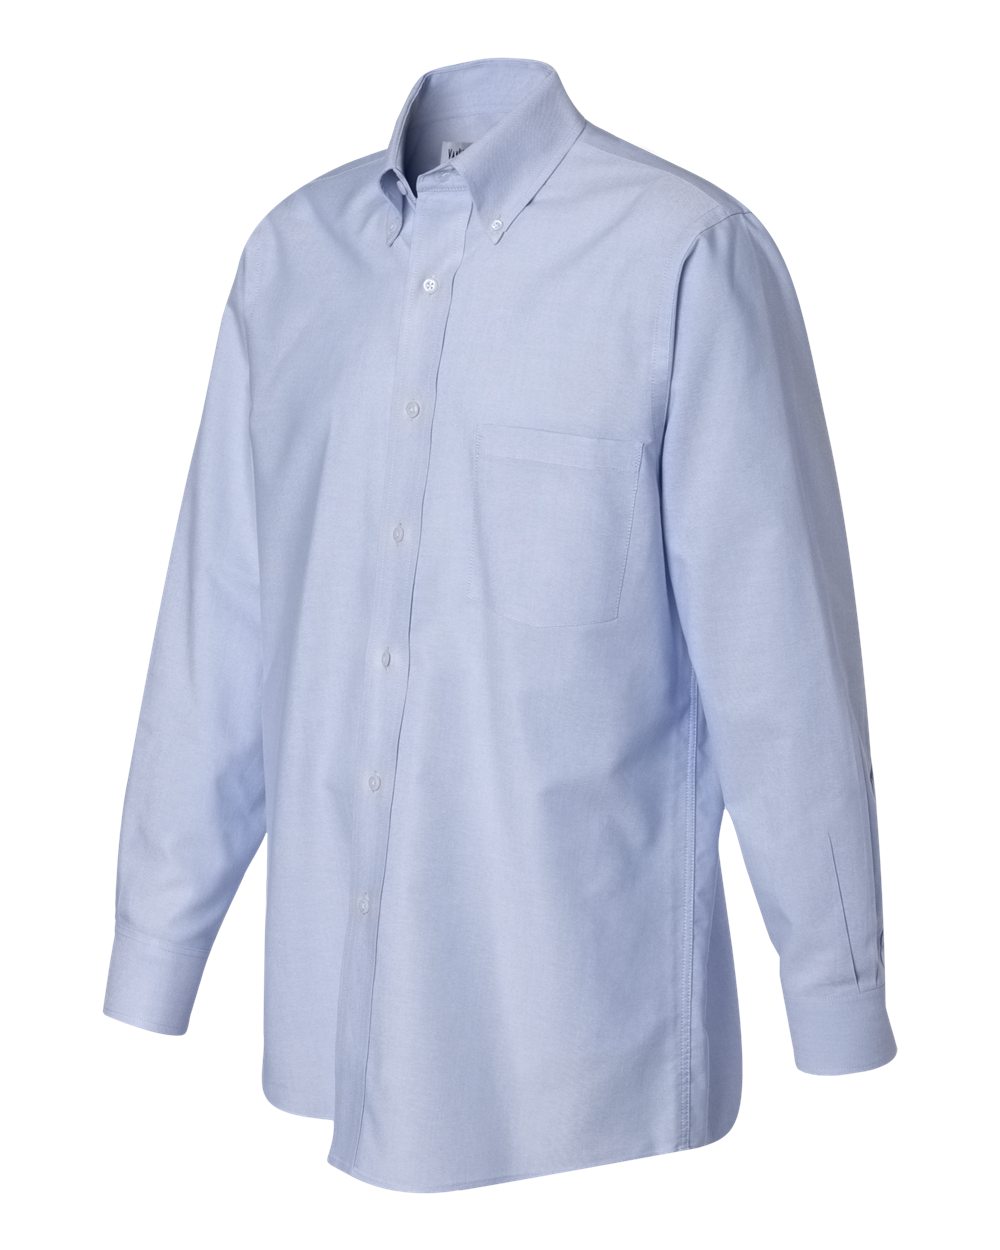 Sample Van Heusen Long Sleeve Oxford Shirt